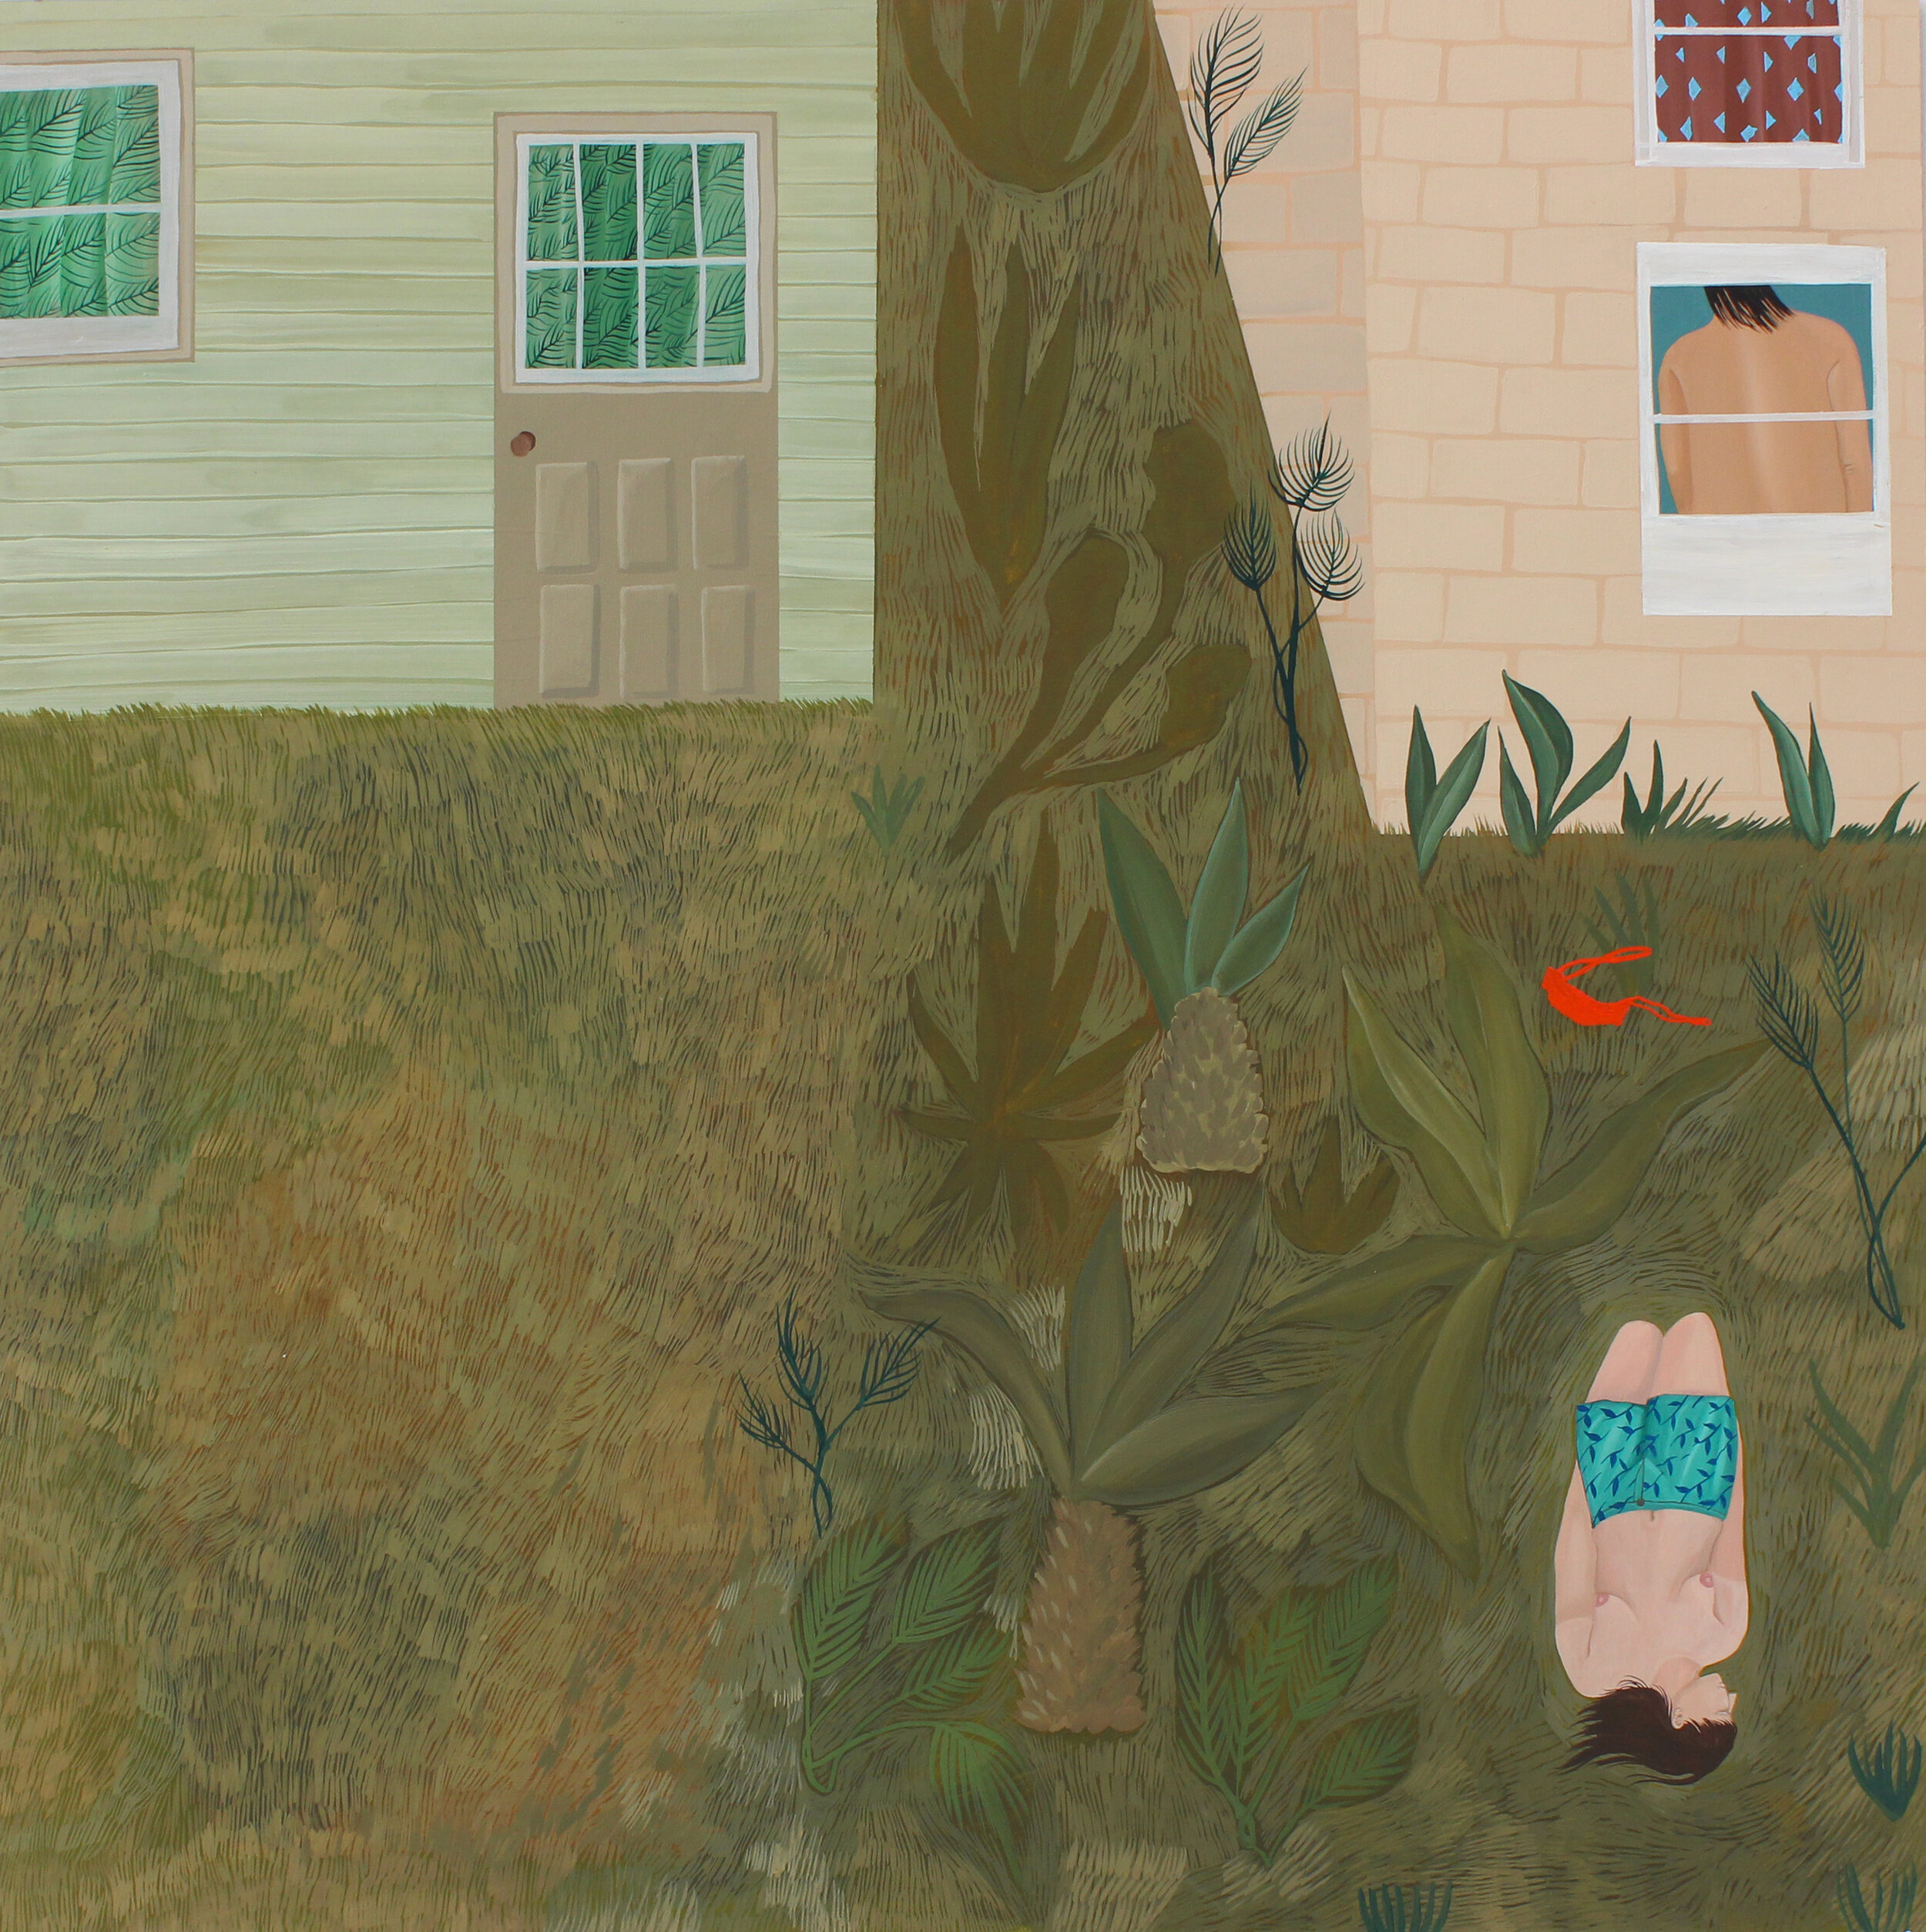 ANNE BUCKWALTER | Neighbors, 24 x 24 inches / 61 x 61 cm, gouache on panel, 2020